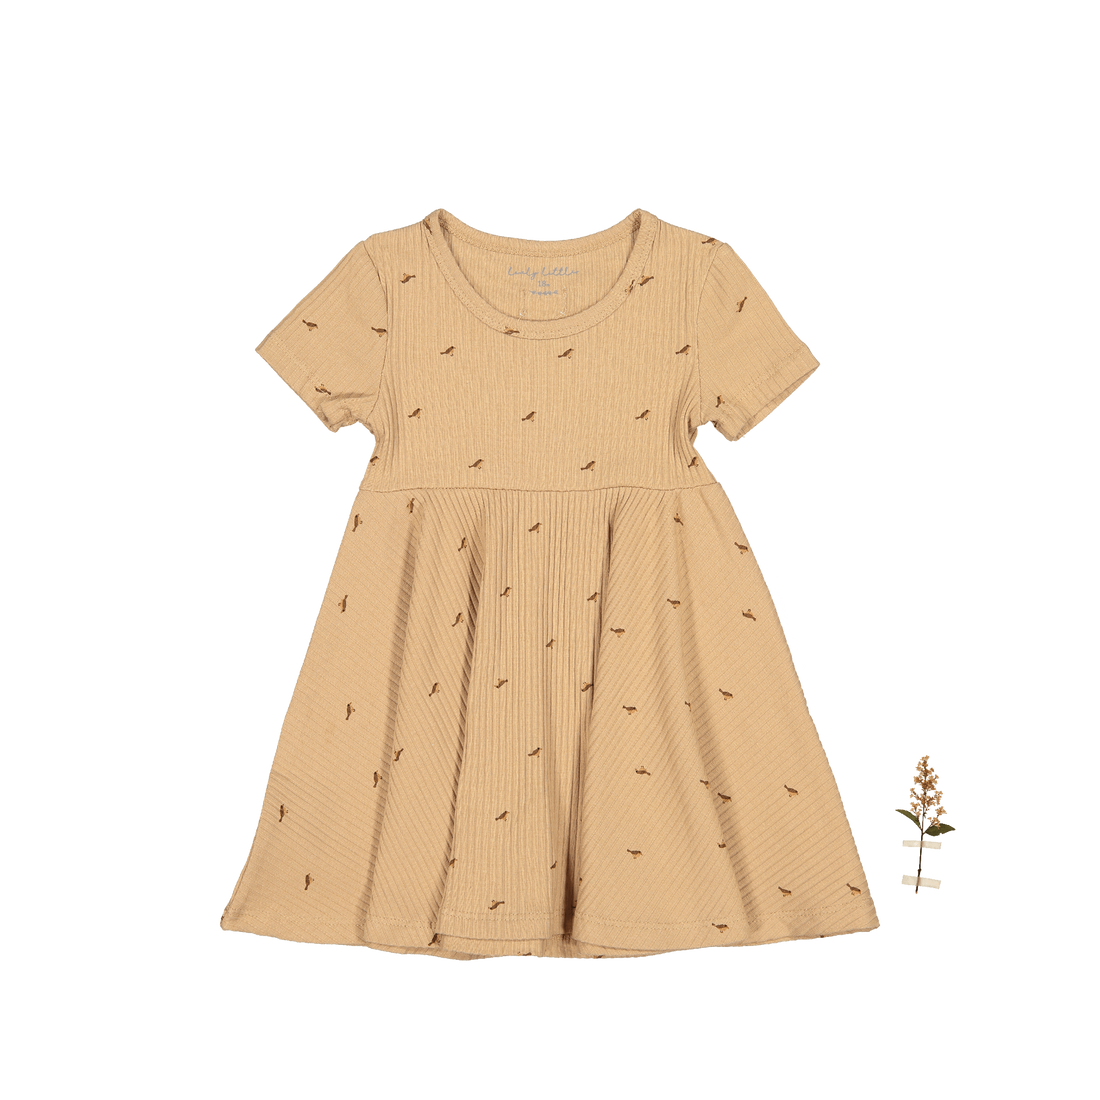 The Printed Short Sleeve Dress - Birdsong